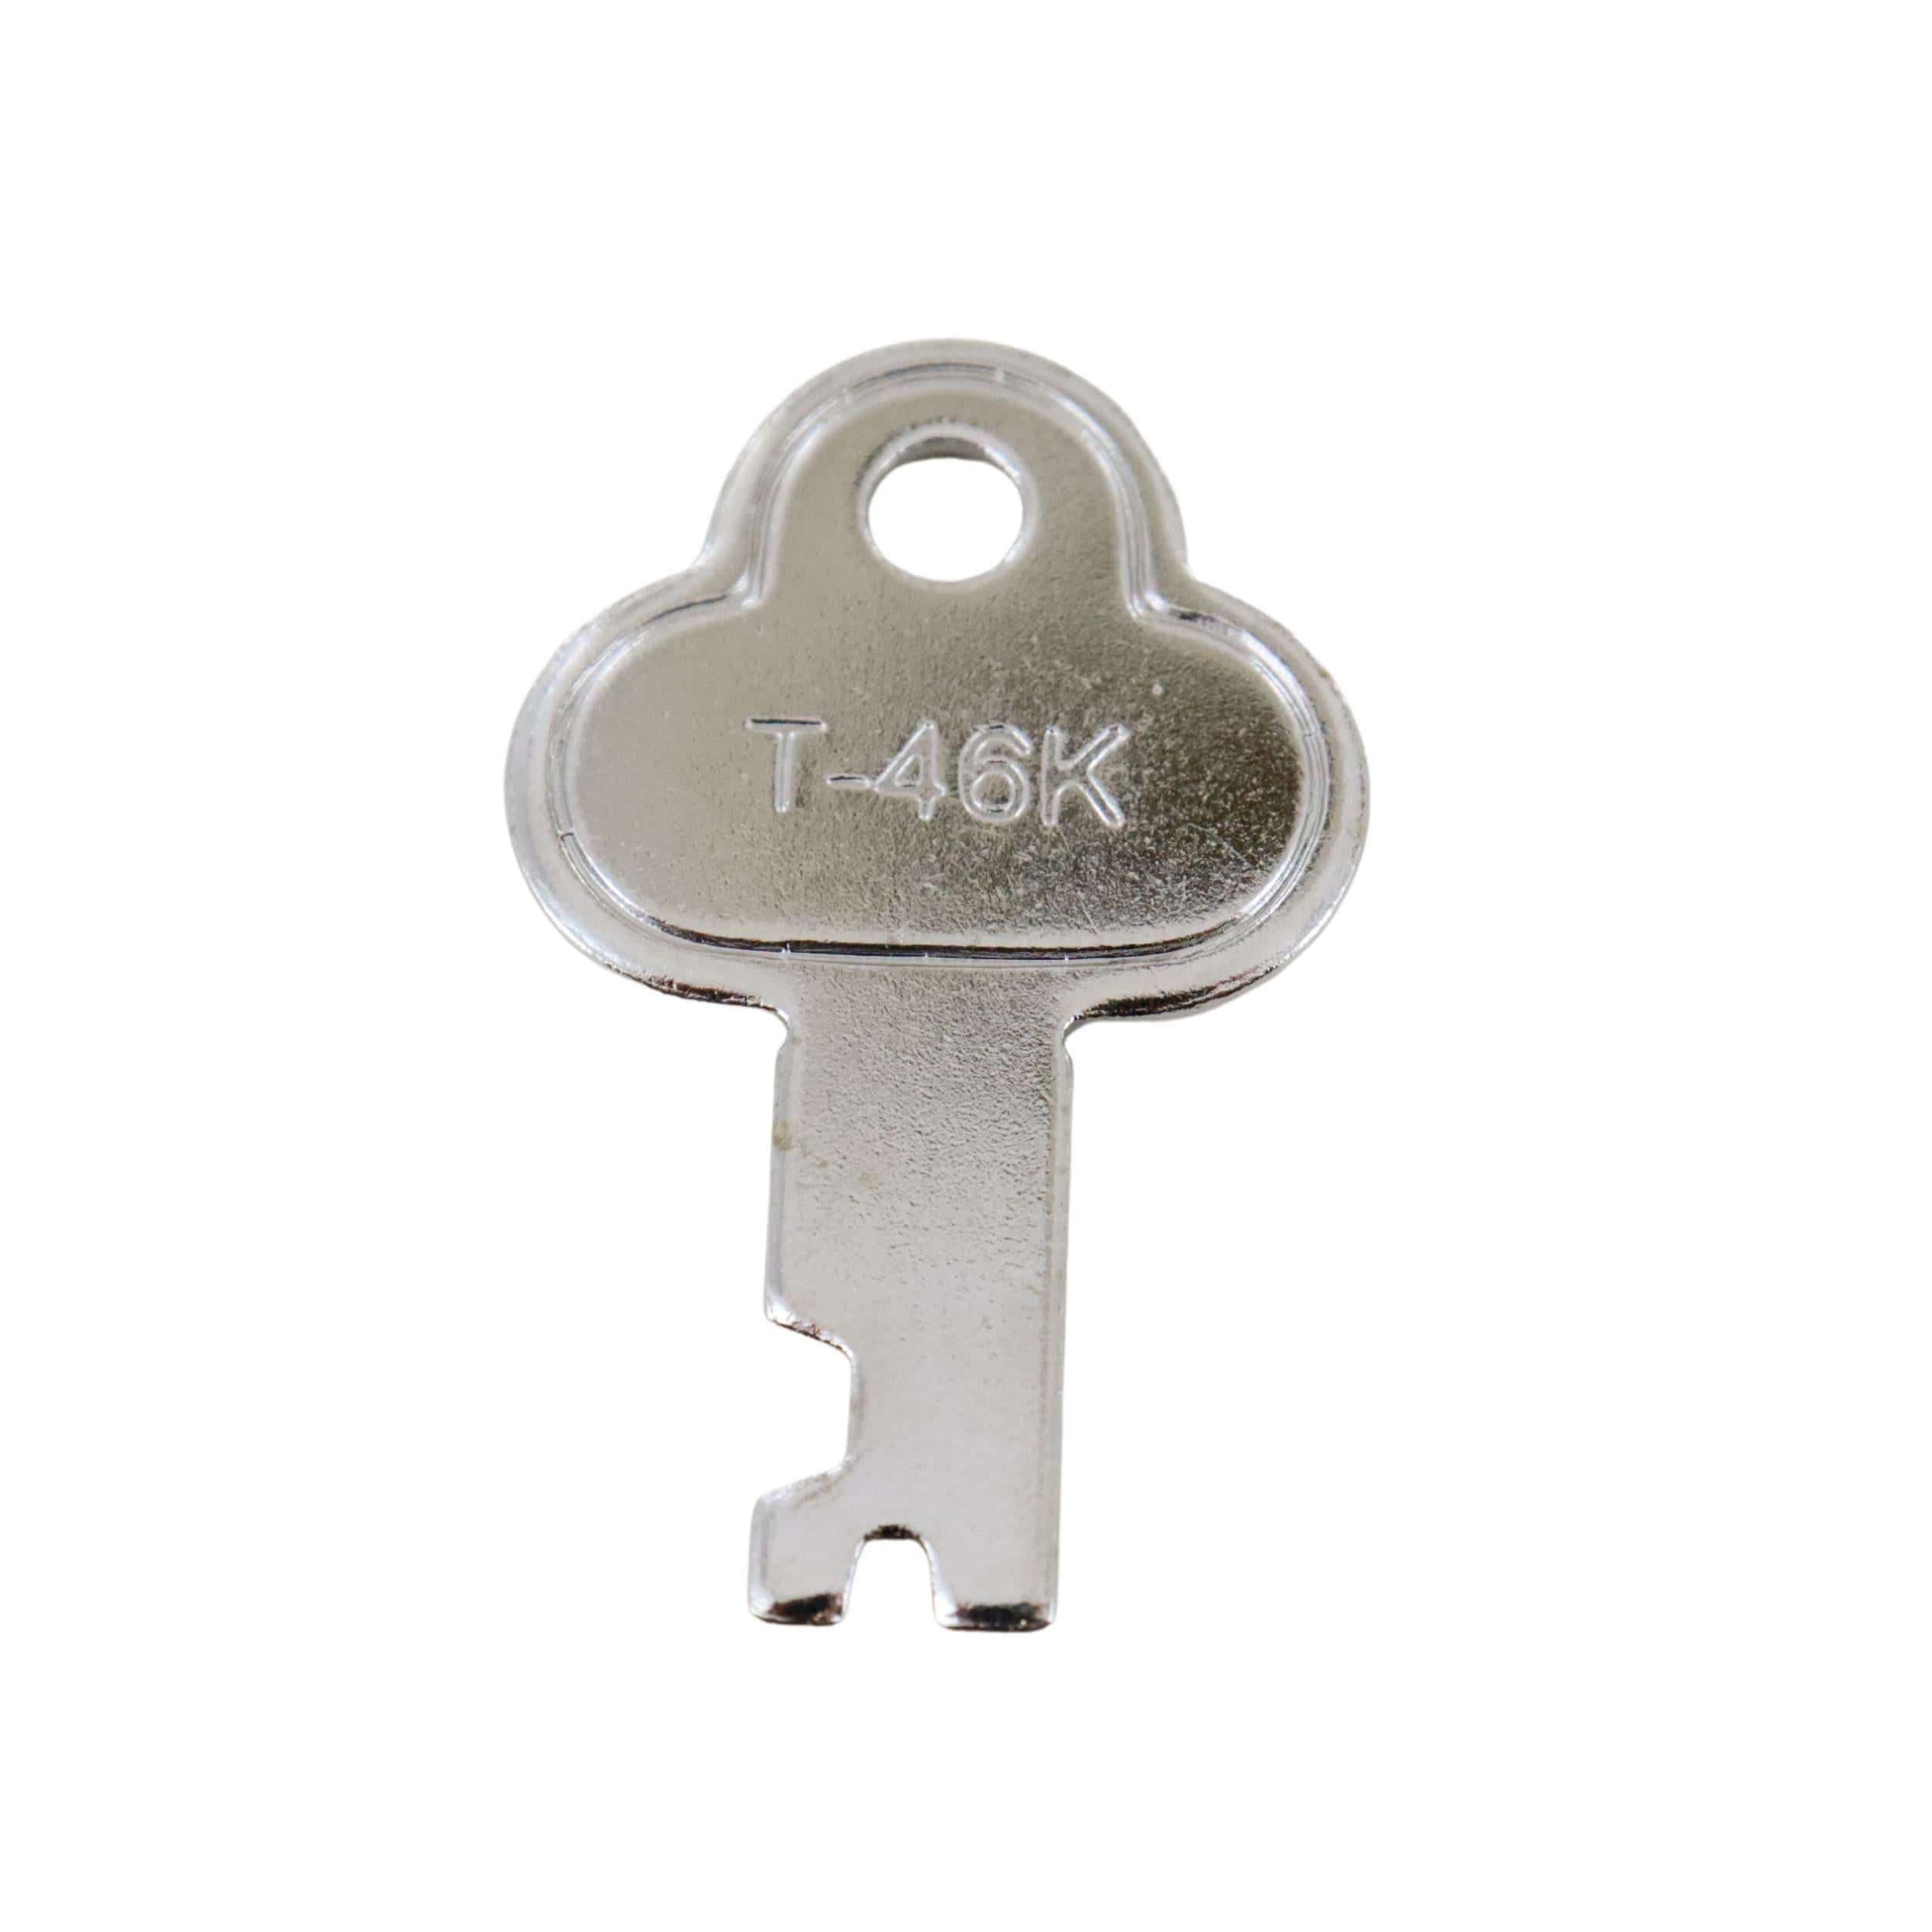 Trunk Lock Key --T46k T46 3815 3835 trunk chest steamer vintage